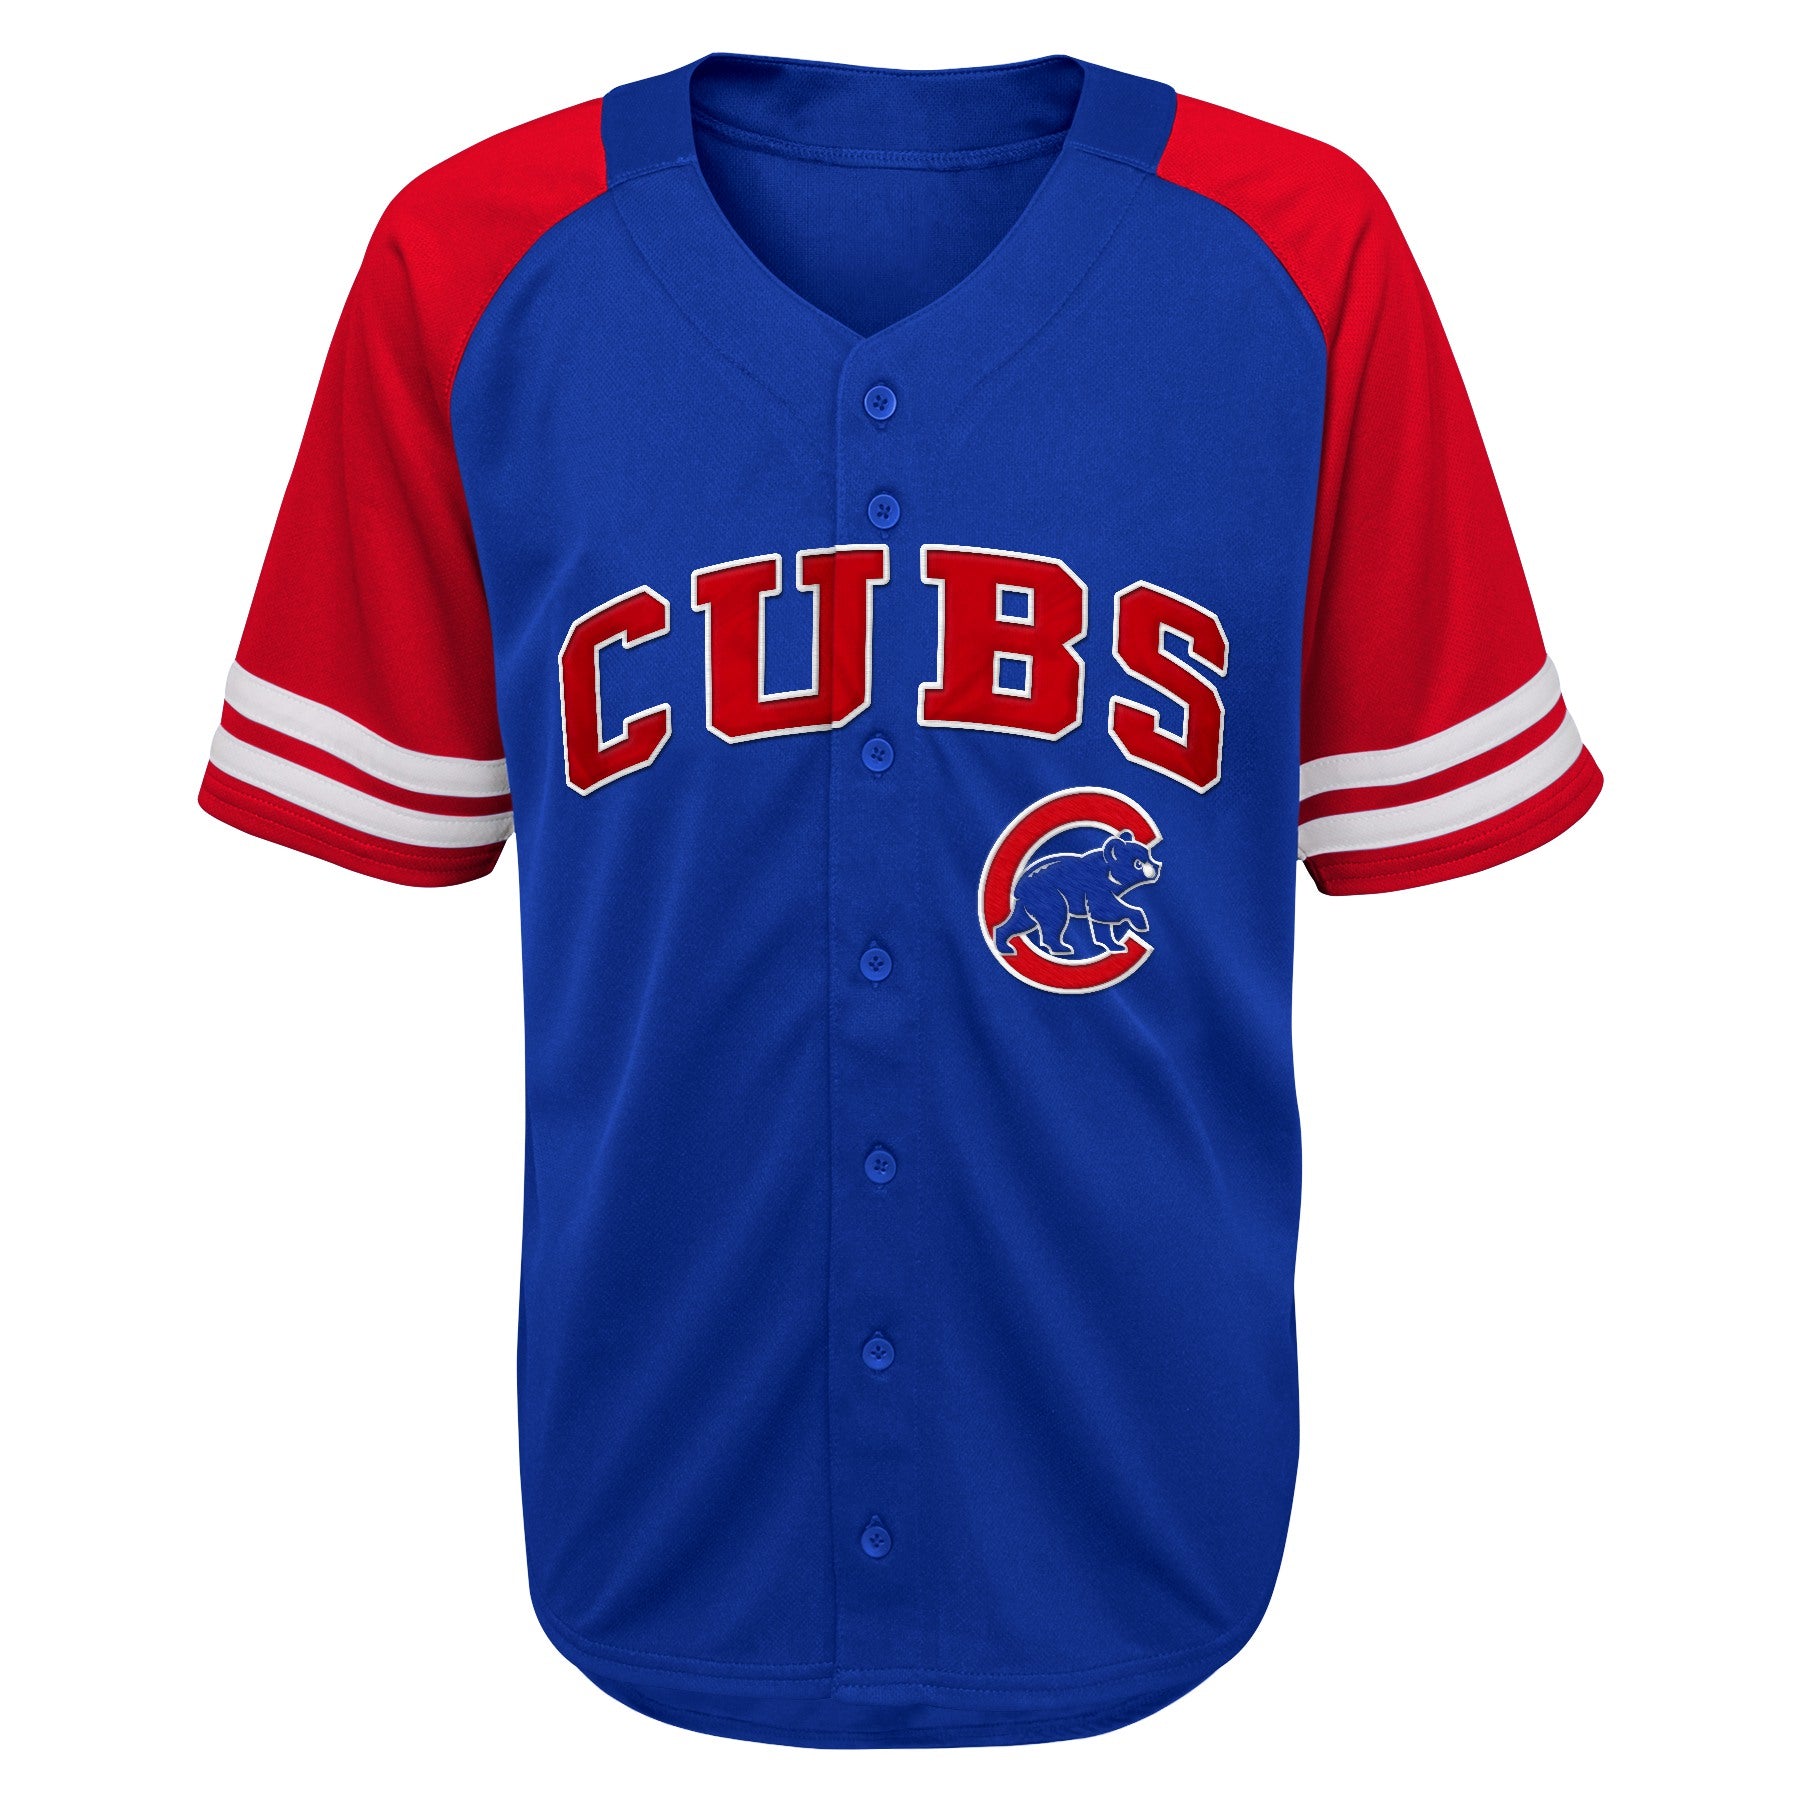 cubs baseball jersey